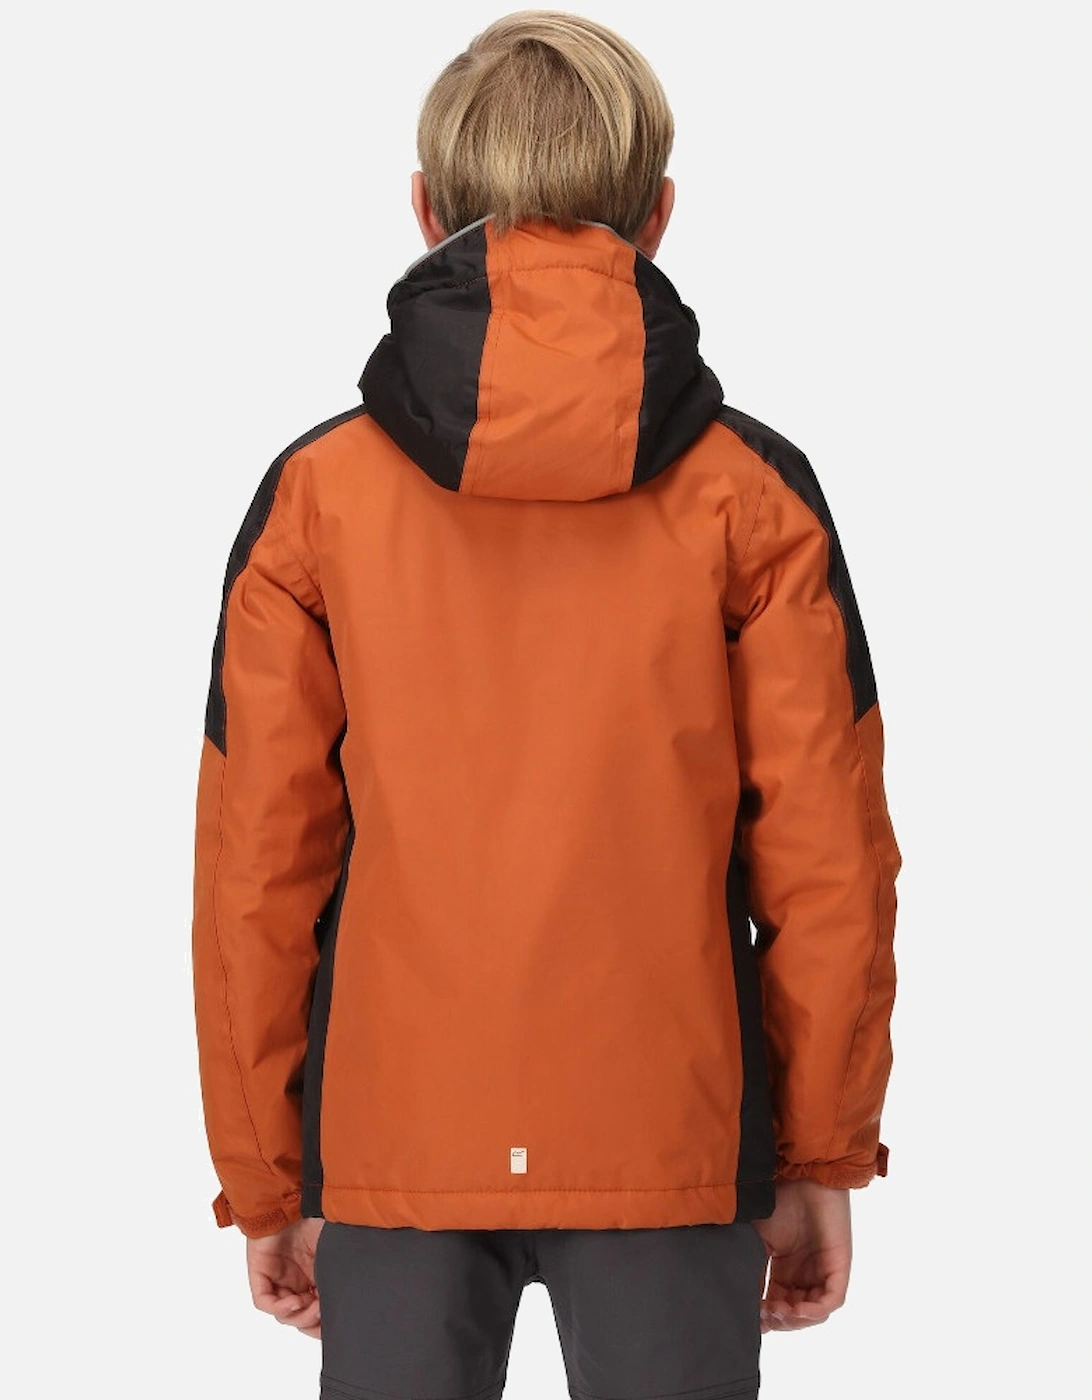 Boys Hurdle Iv Waterproof Insulated Jacket Coat